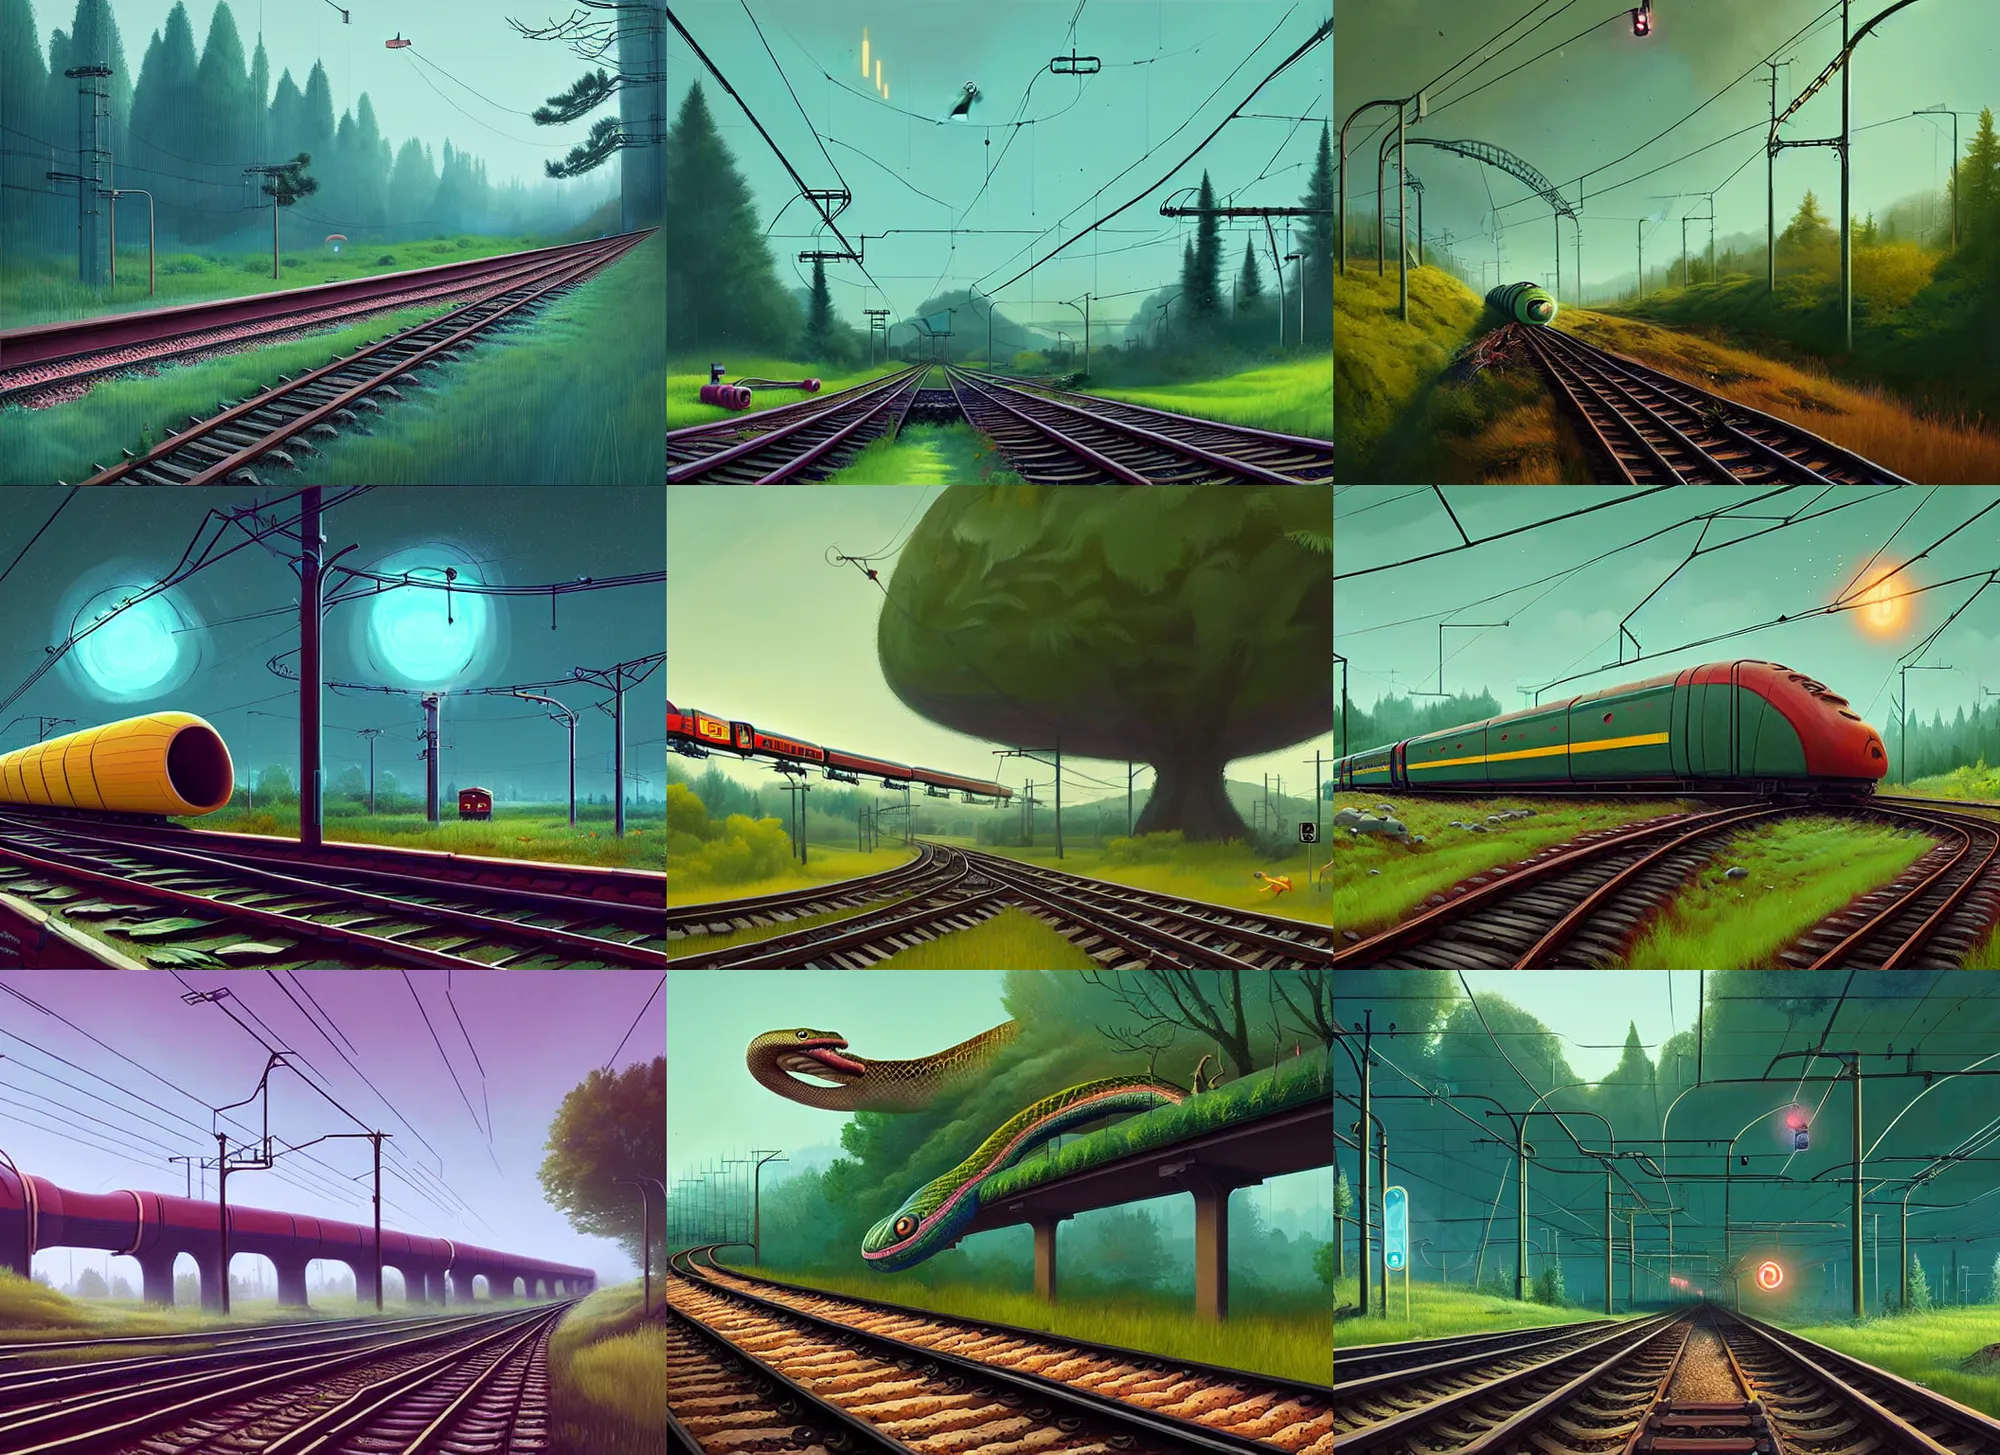 Prompt: a giant snake speeding along a railway track. photorealistic fantasy art by Simon Stålenhag